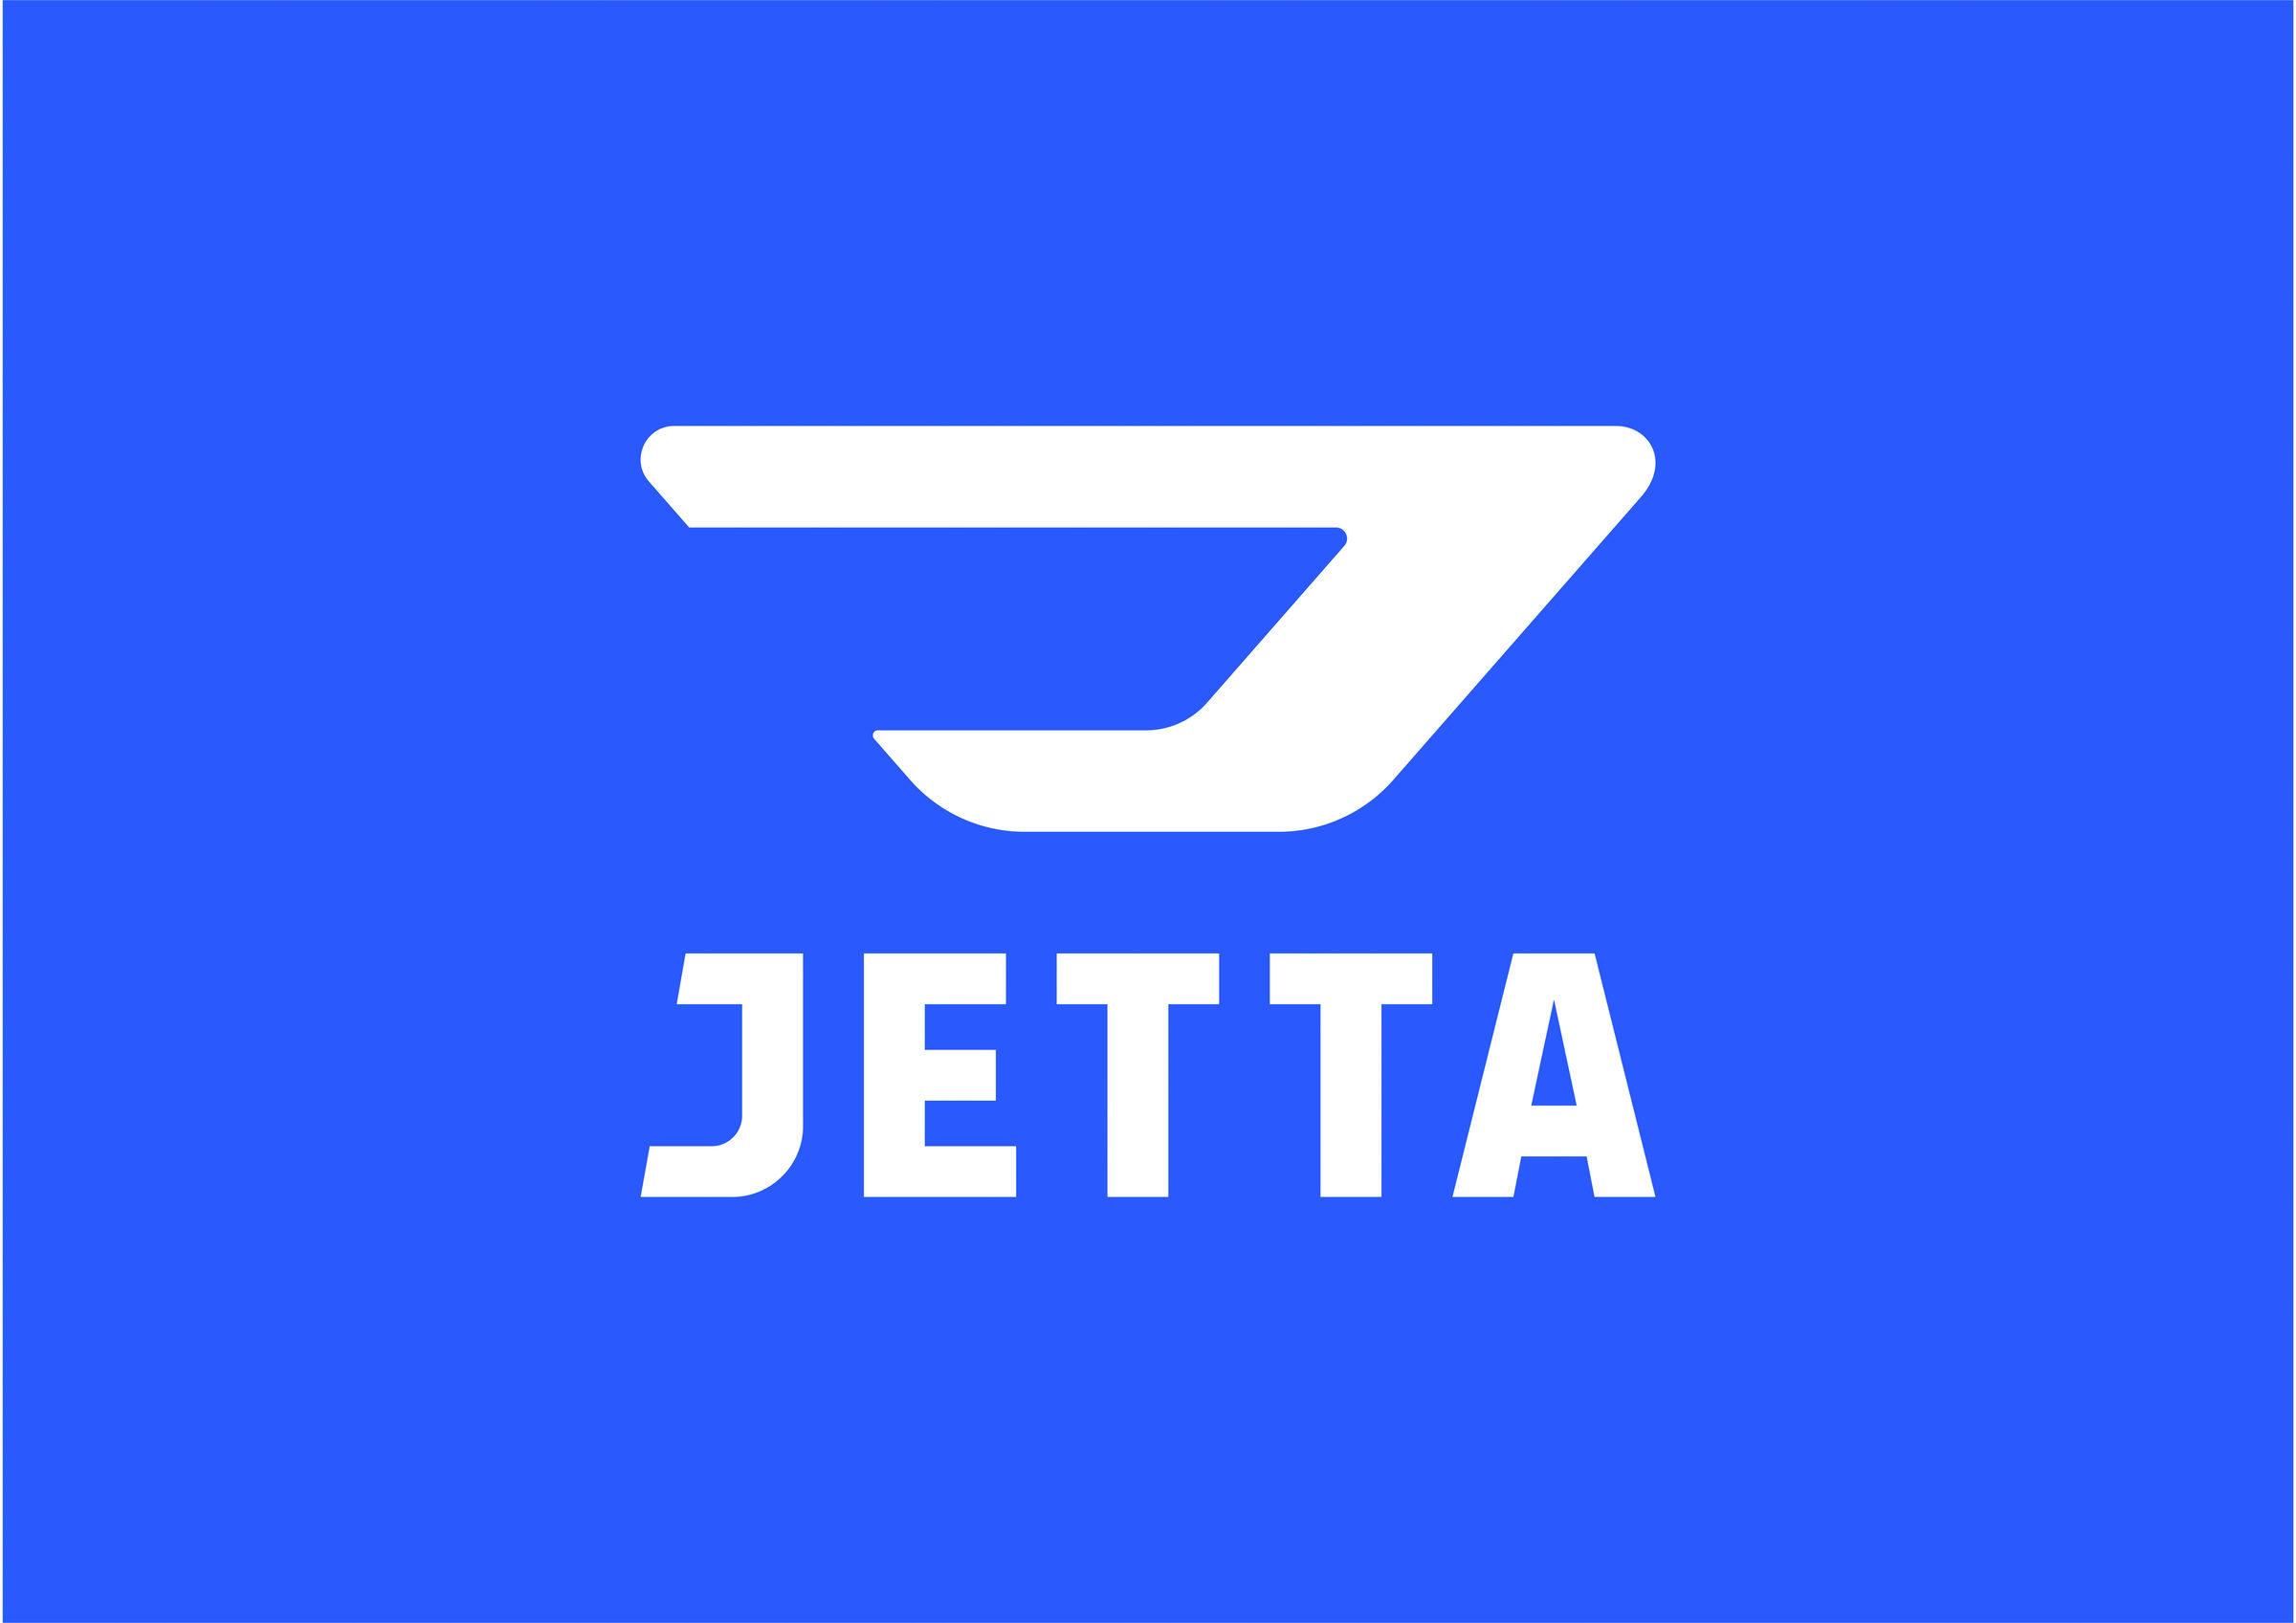 JETTA logo